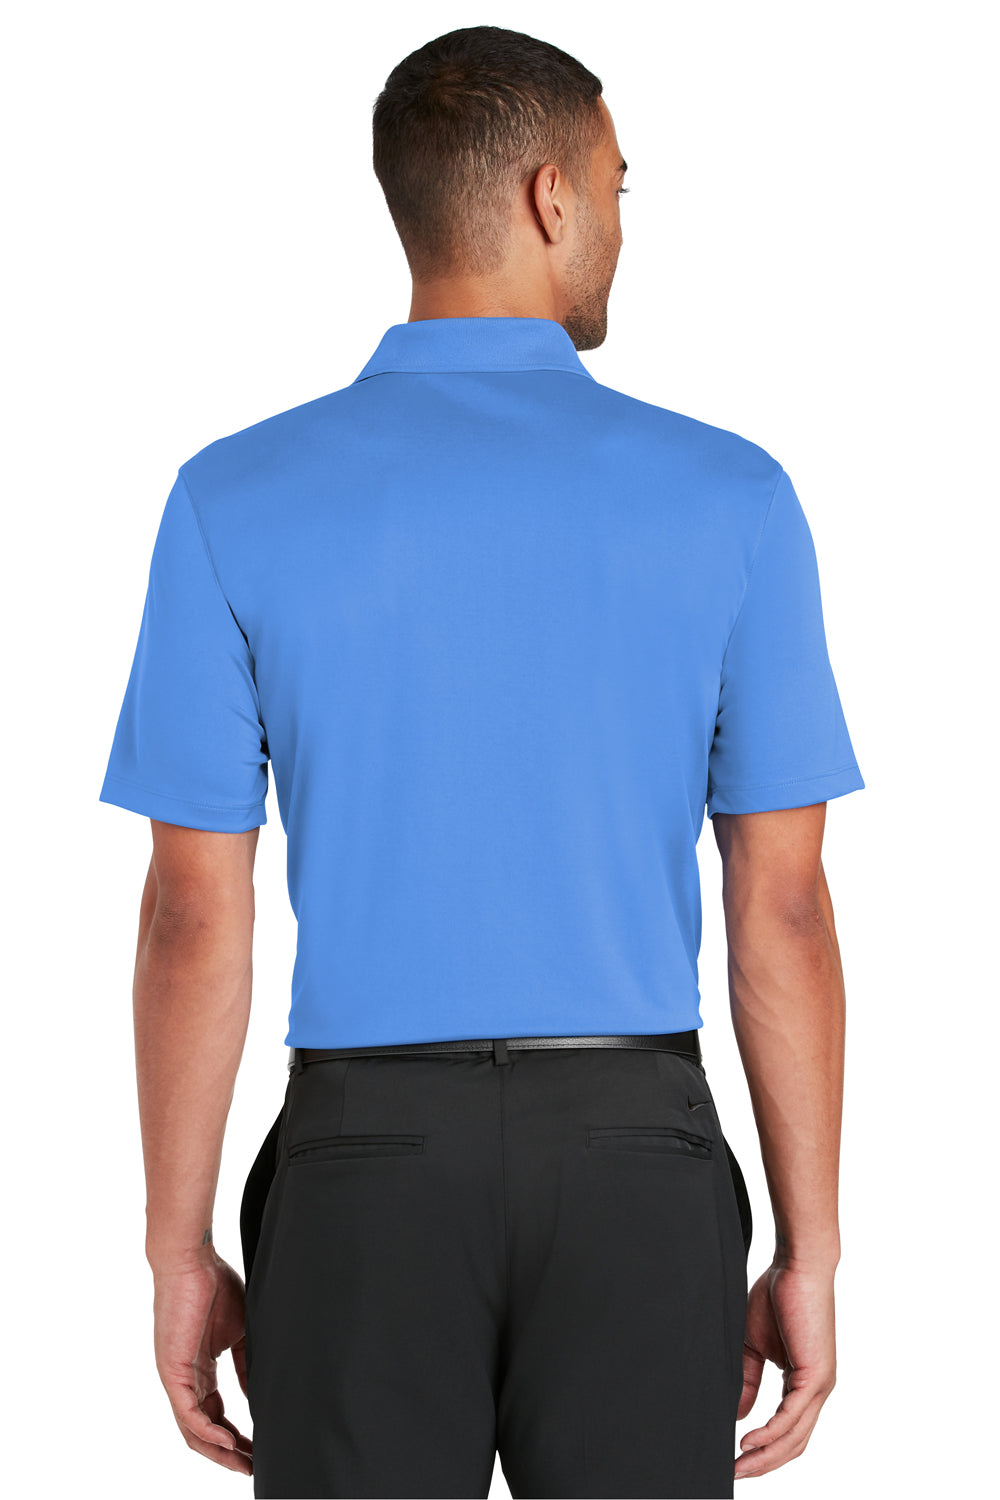 Nike 838956 Mens Players Dri-Fit Moisture Wicking Short Sleeve Polo Shirt Pacific Blue Back